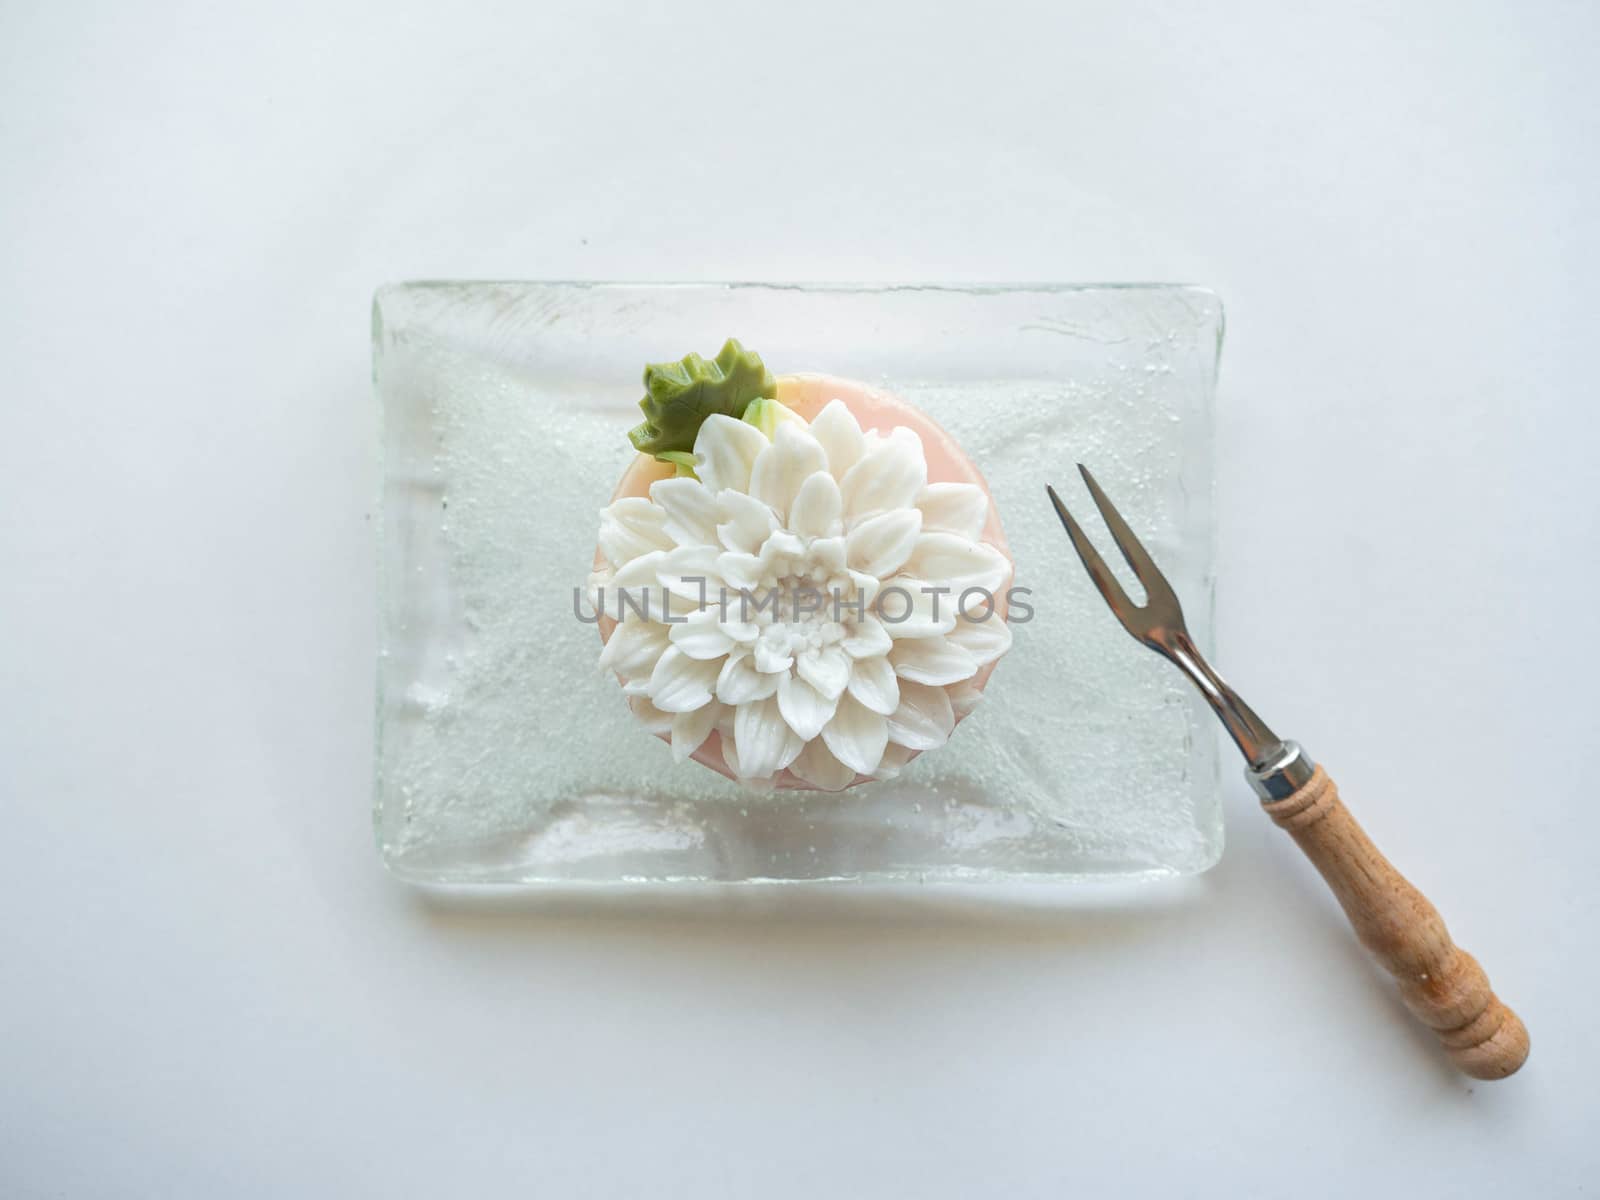 Jelly Thai dessert Flower pattern have Sweet taste on dish glass,Made from coconut milk,White Background